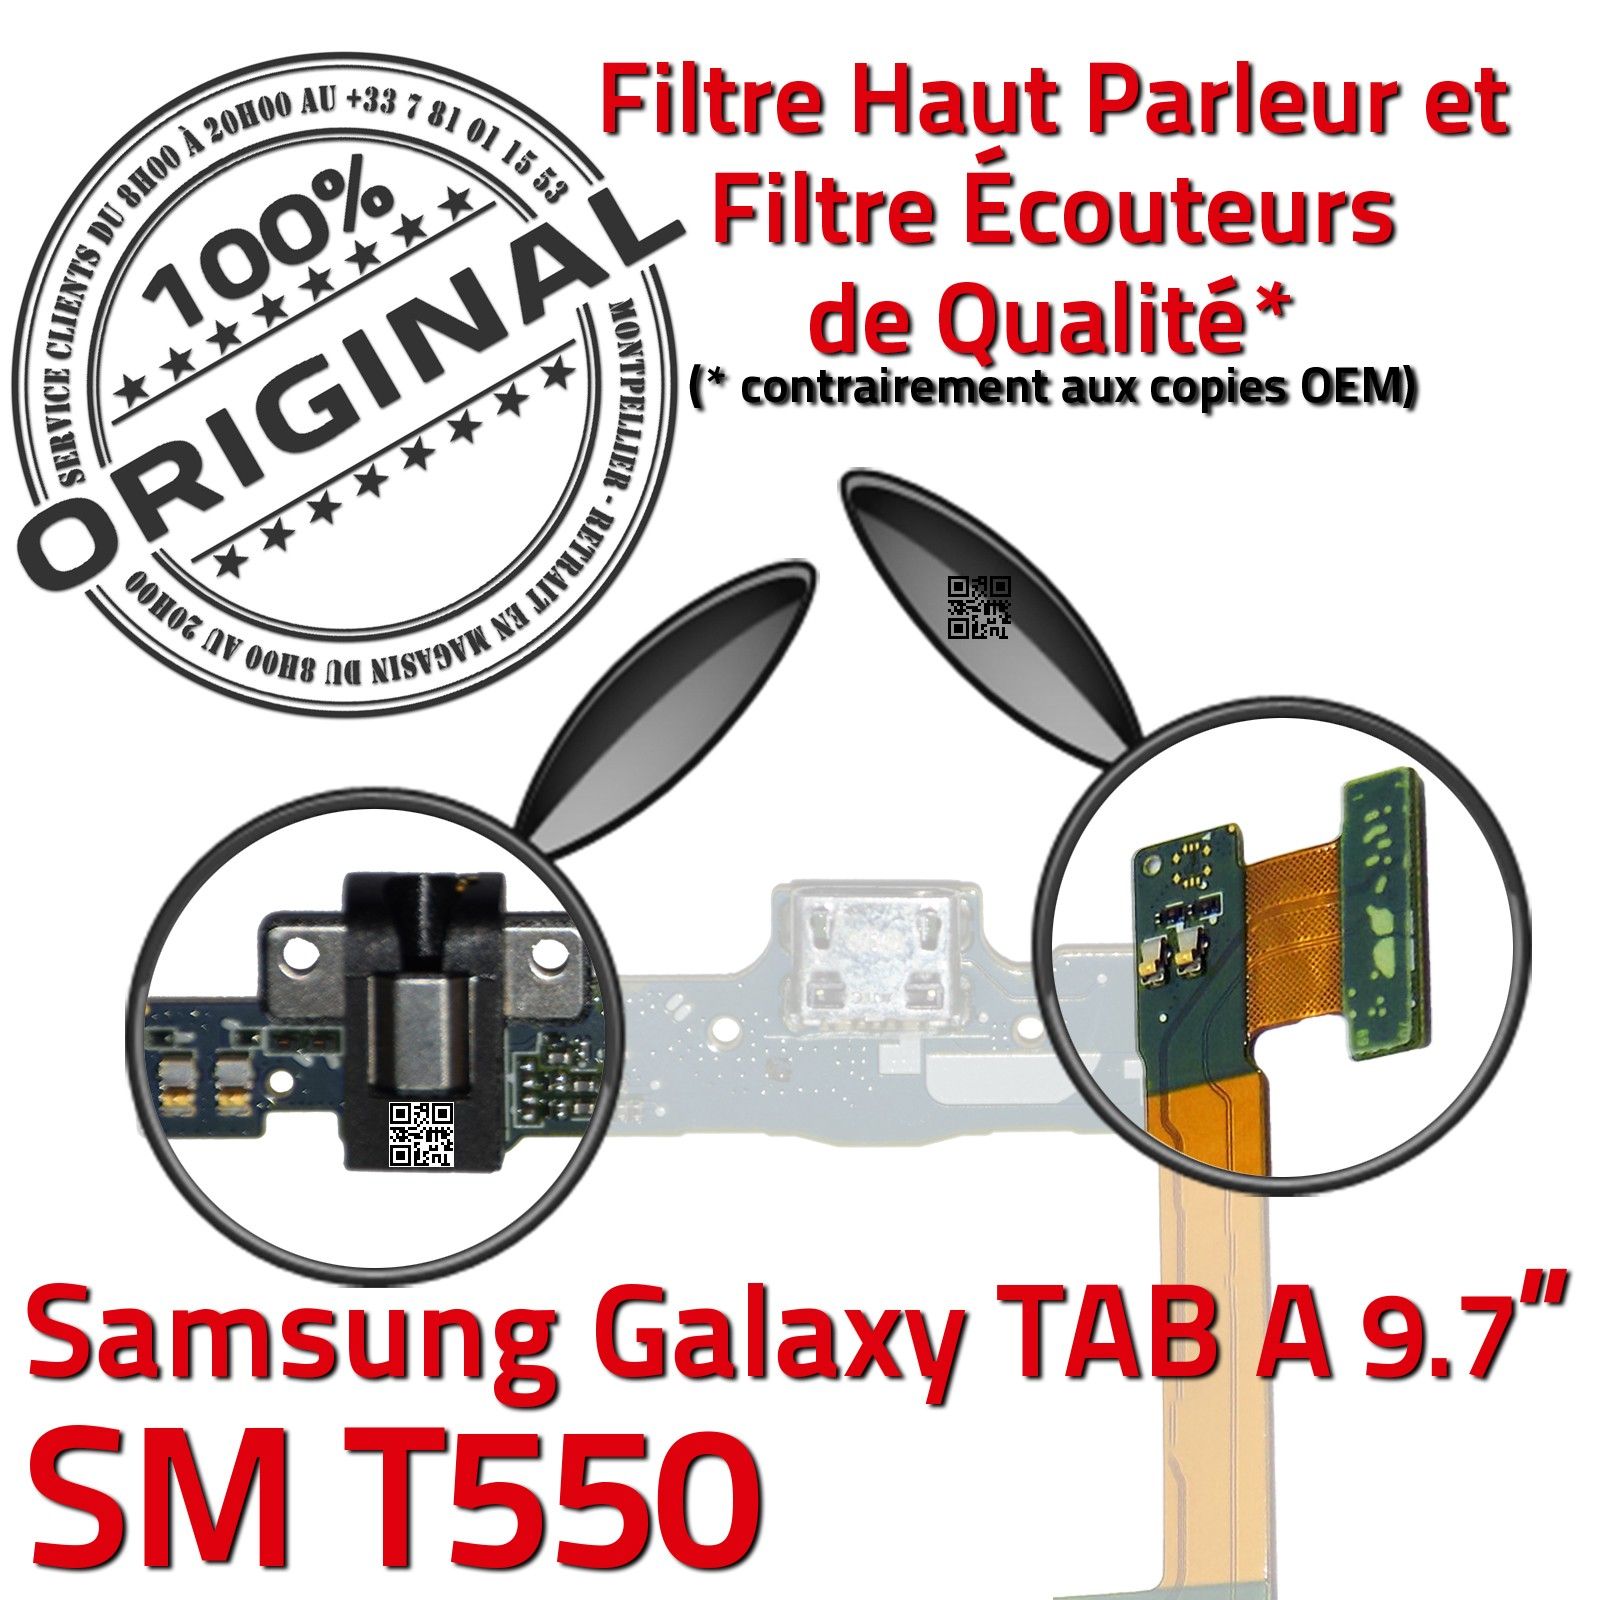 ORIGINAL Samsung Galaxy TAB A SM T550 Connecteur Charge Haut Parleur Bouton HOME